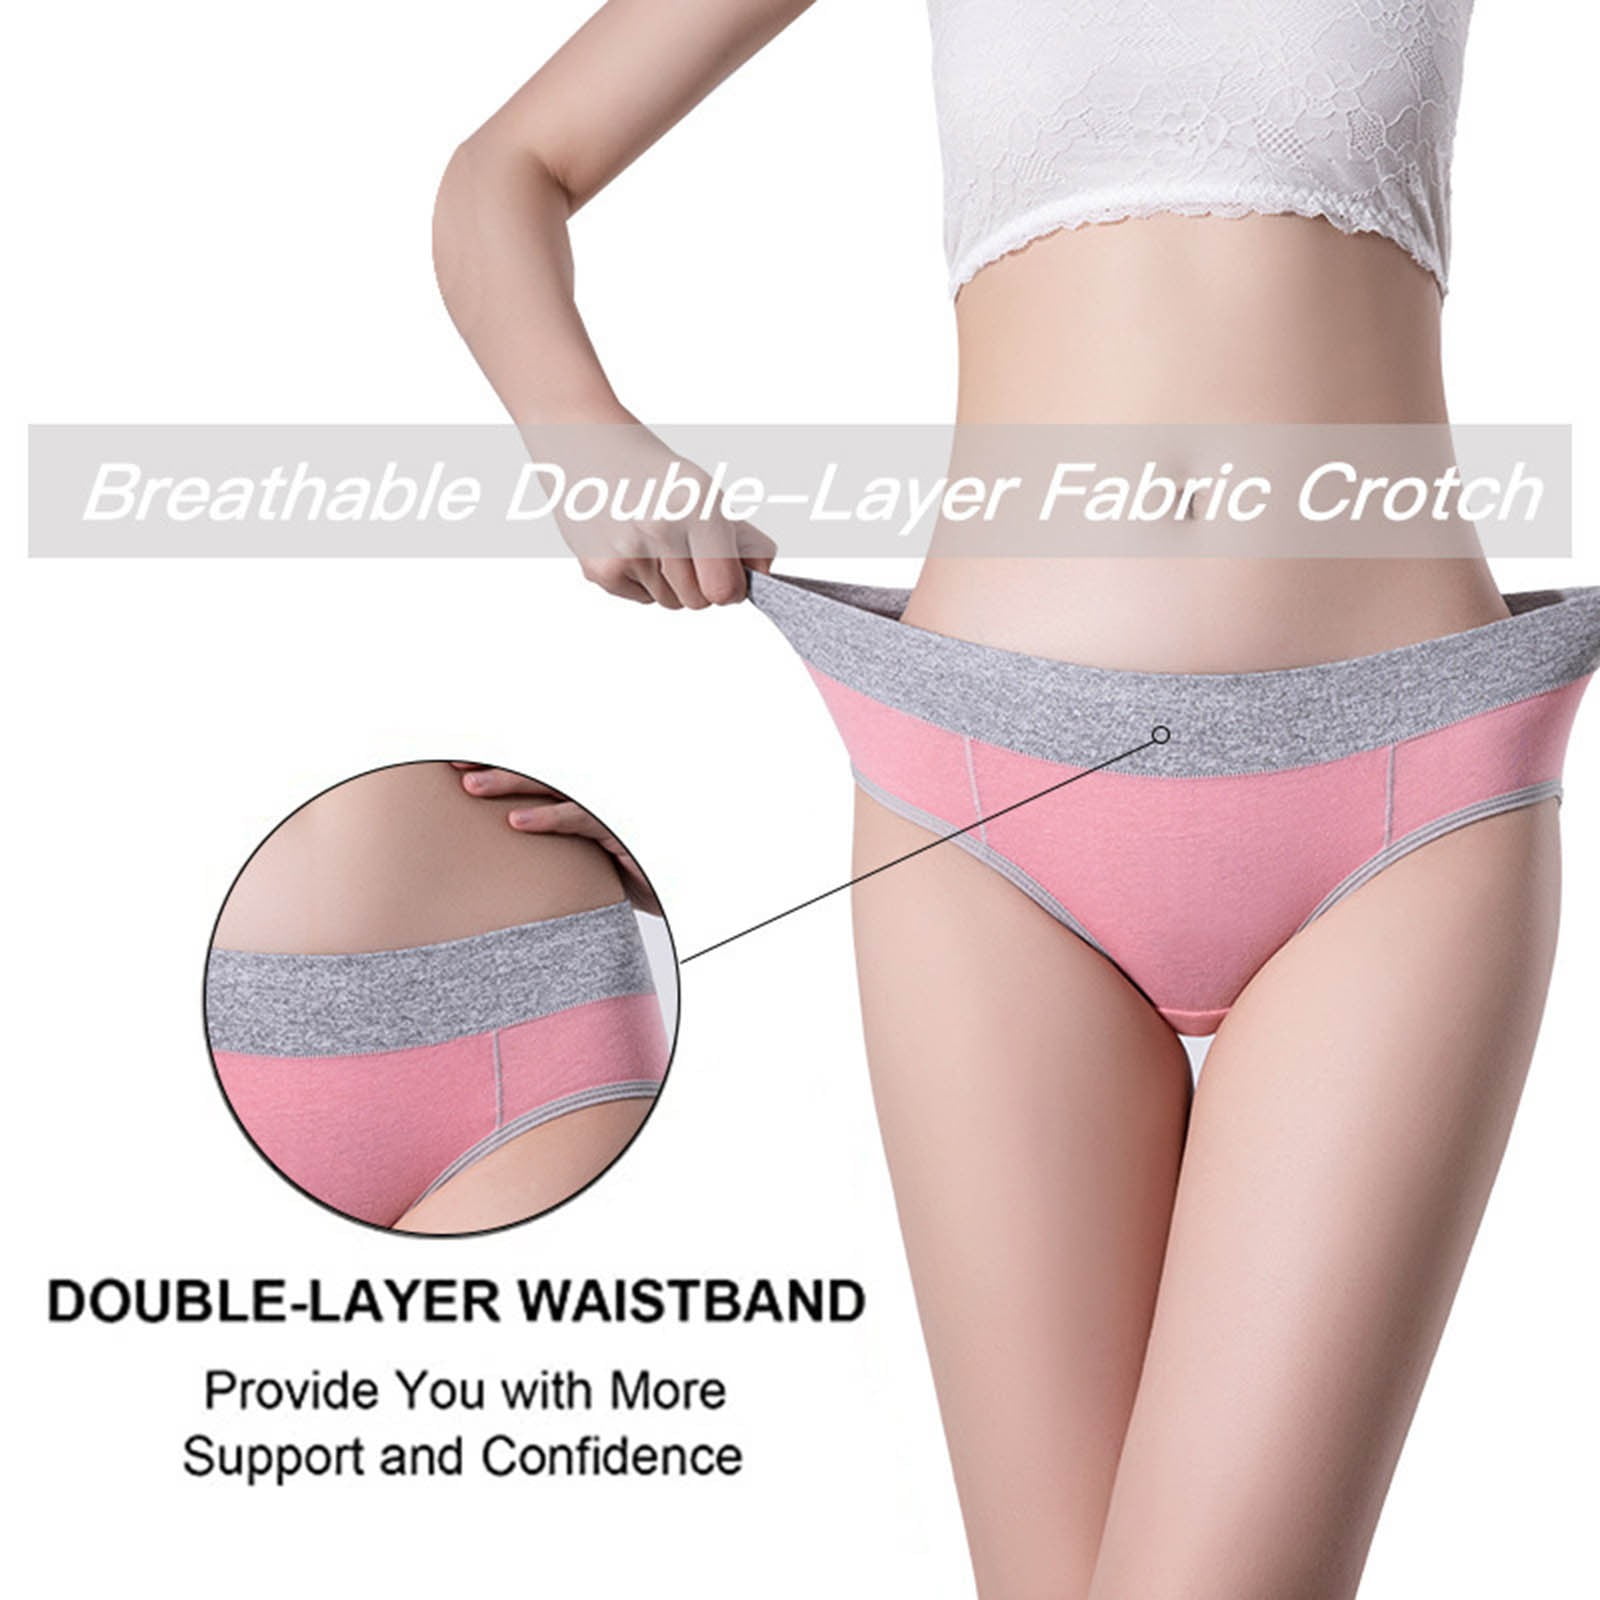 LEEy-world Plus Size Lingerie Wo No Show Seamless Underwear